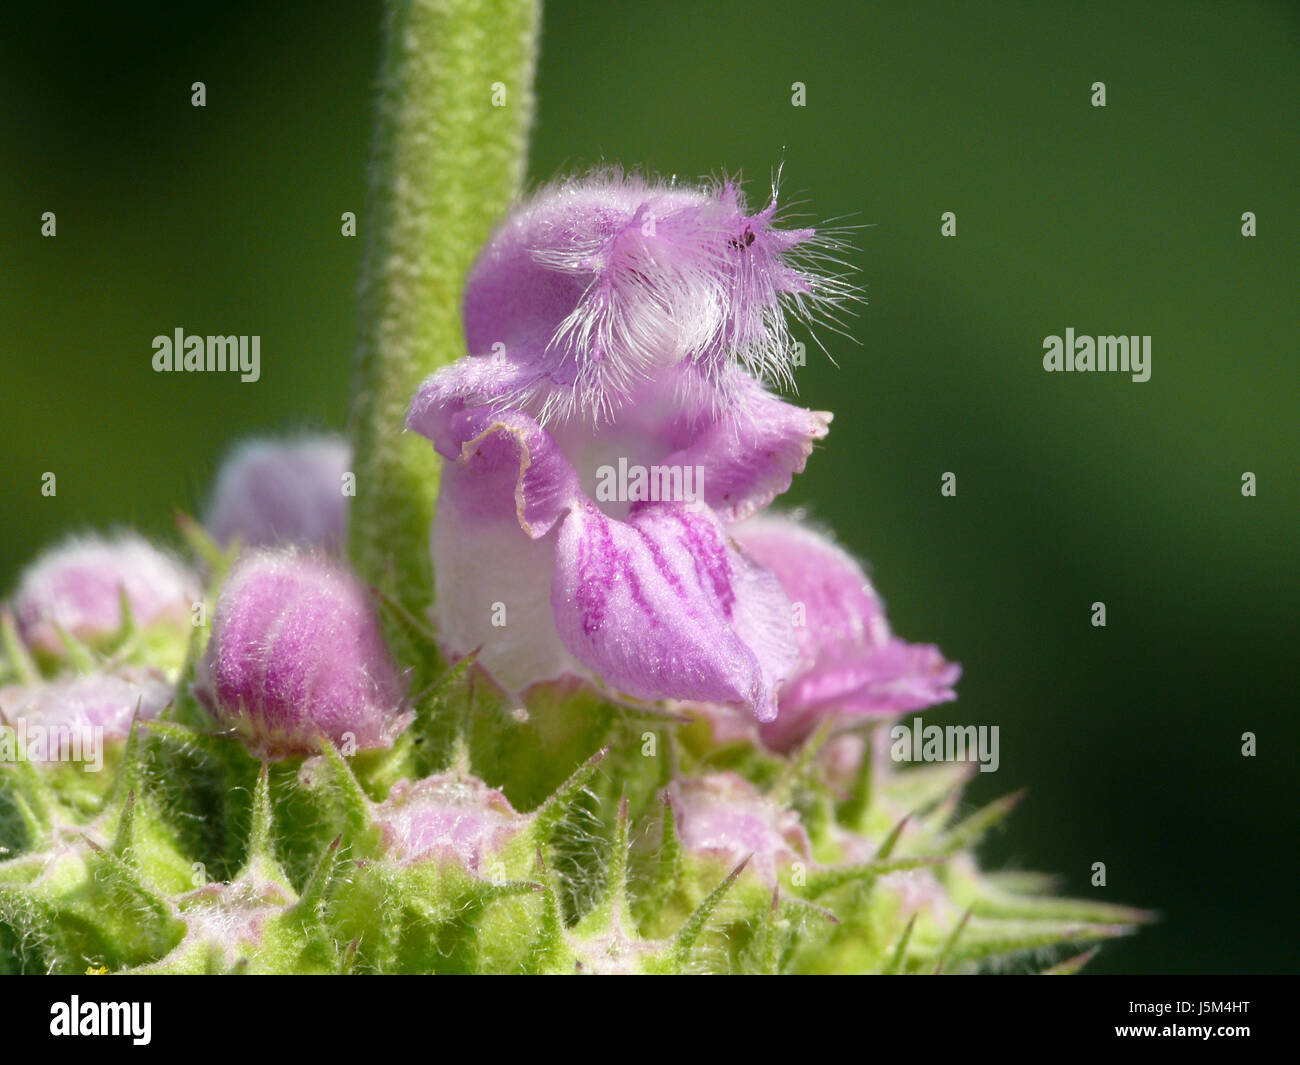 flower of phlomis cashmeriana Stock Photo